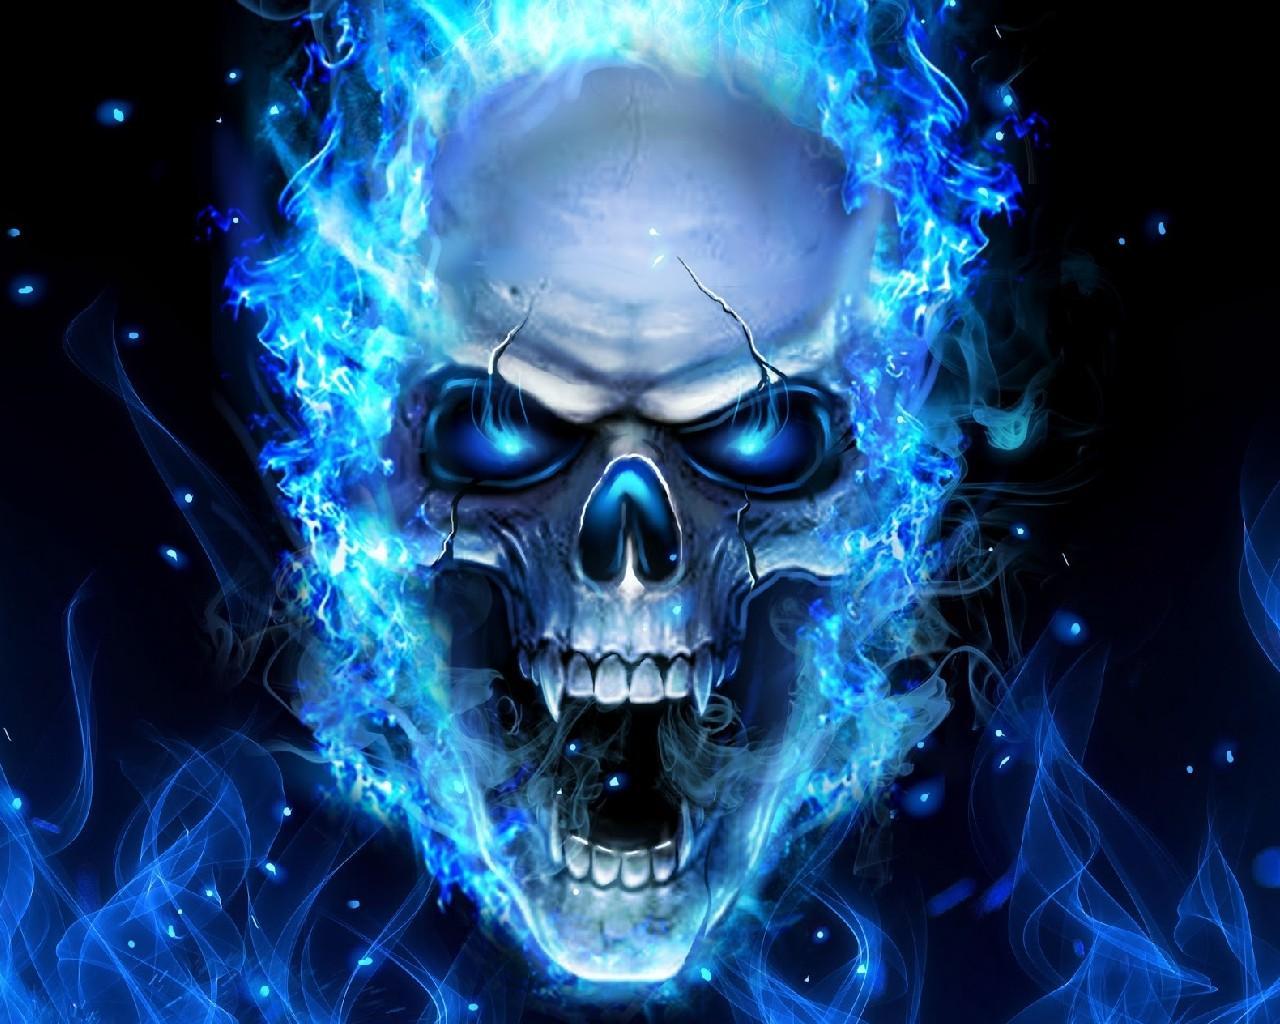 Fondos de pantalla 3D Blue Skull Theme for Android - APK ...